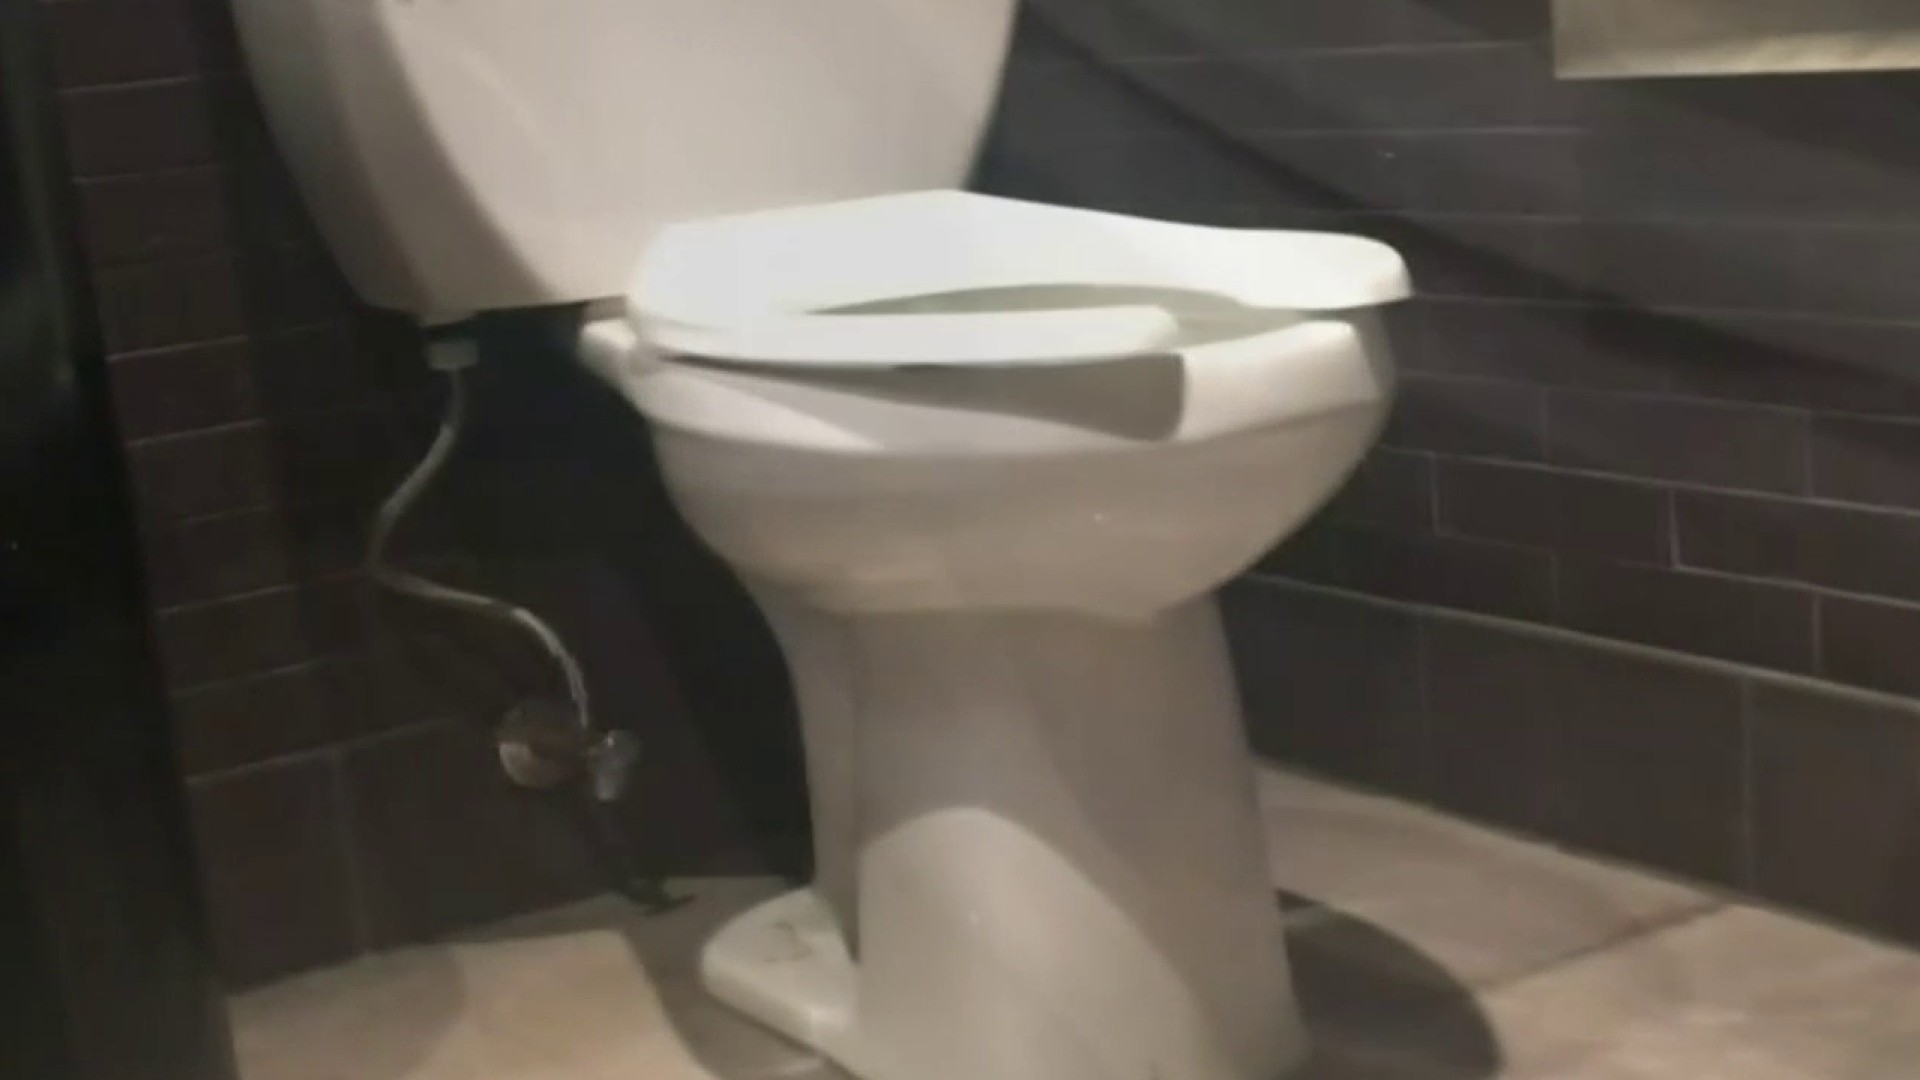 barbara alewine add secret camera in toilet photo